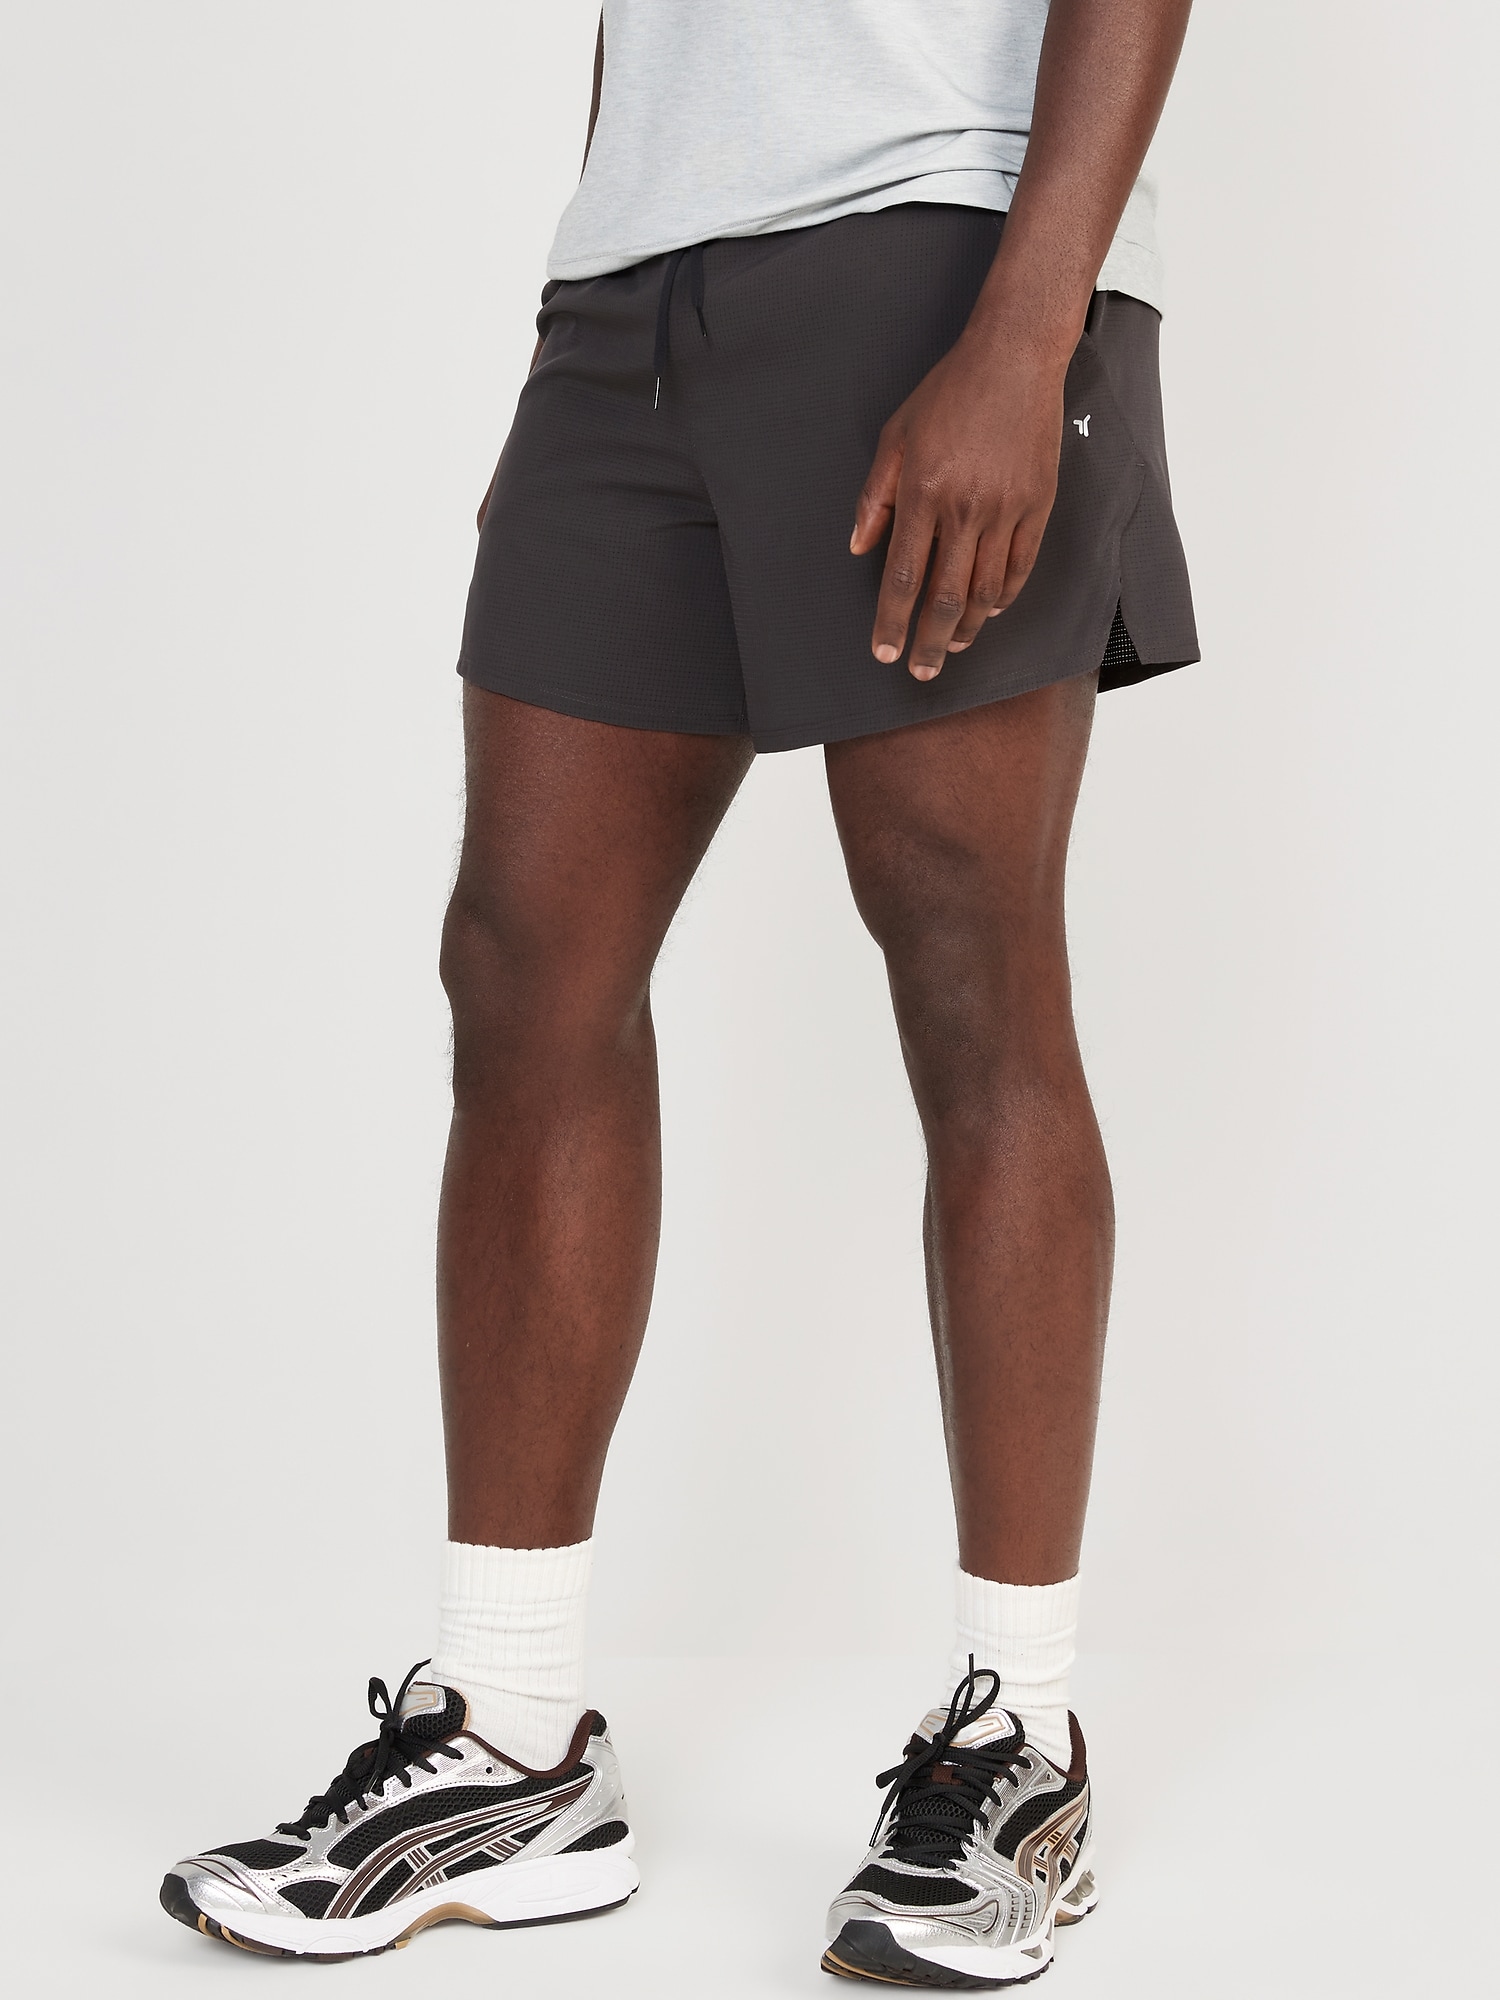 StretchTech Lined Run Shorts -- 5-inch inseam Hot Deal